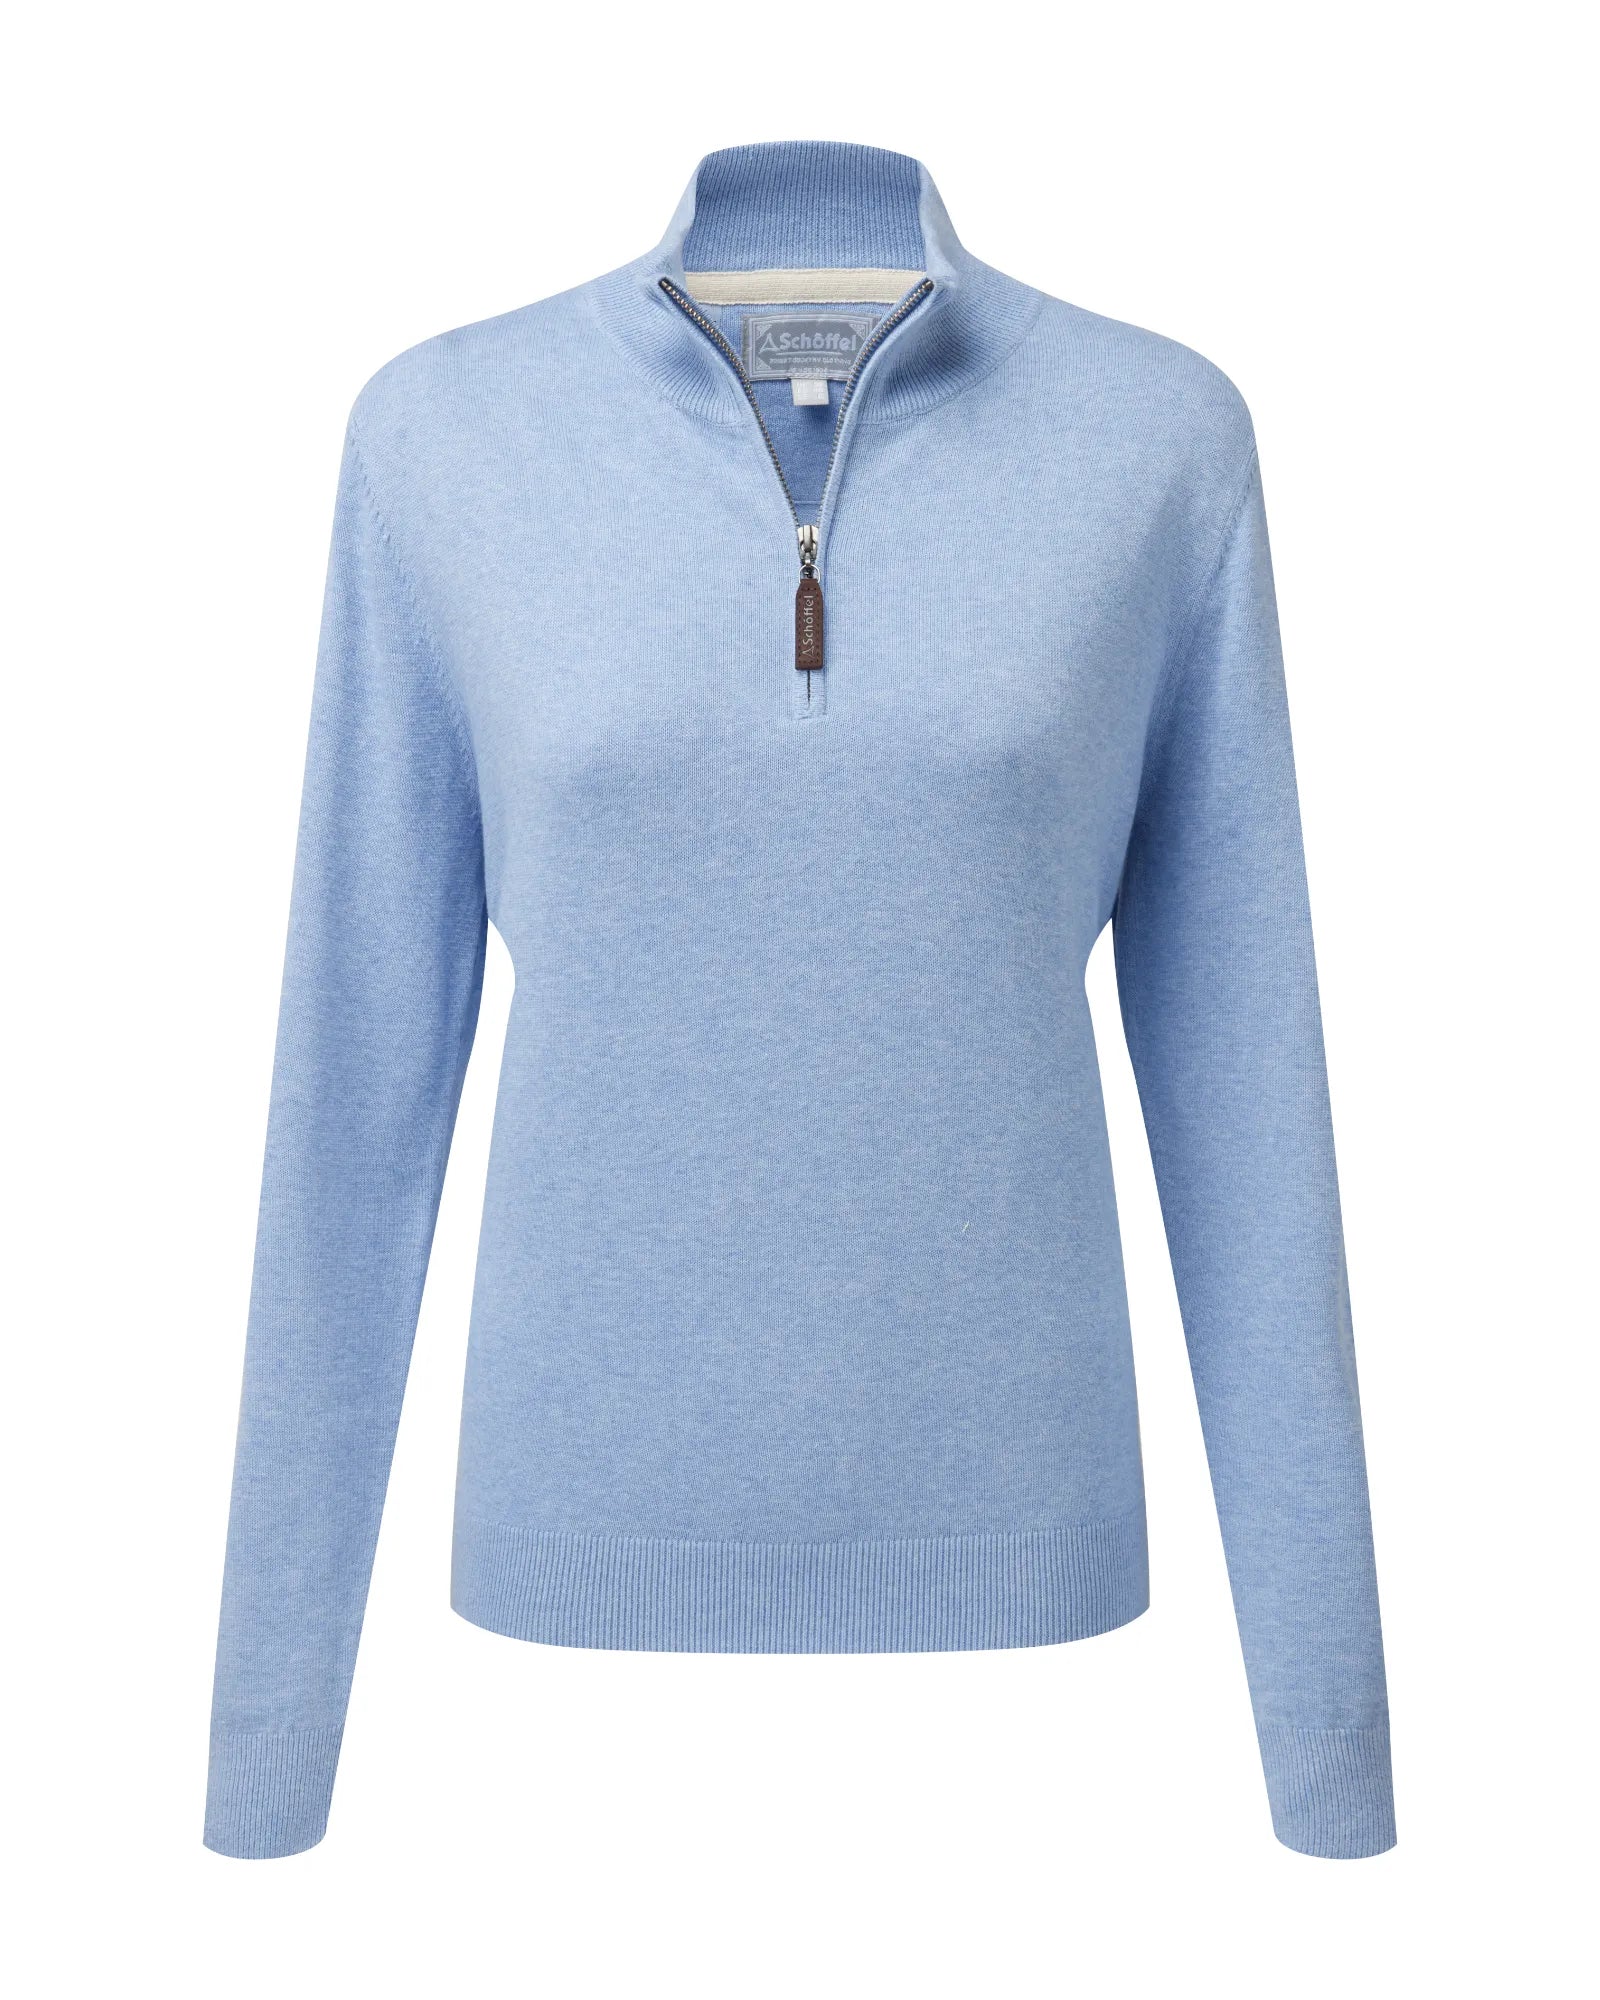 Polperro Sky Blue Pima Cotton 1/4 Zip Sweatshirt